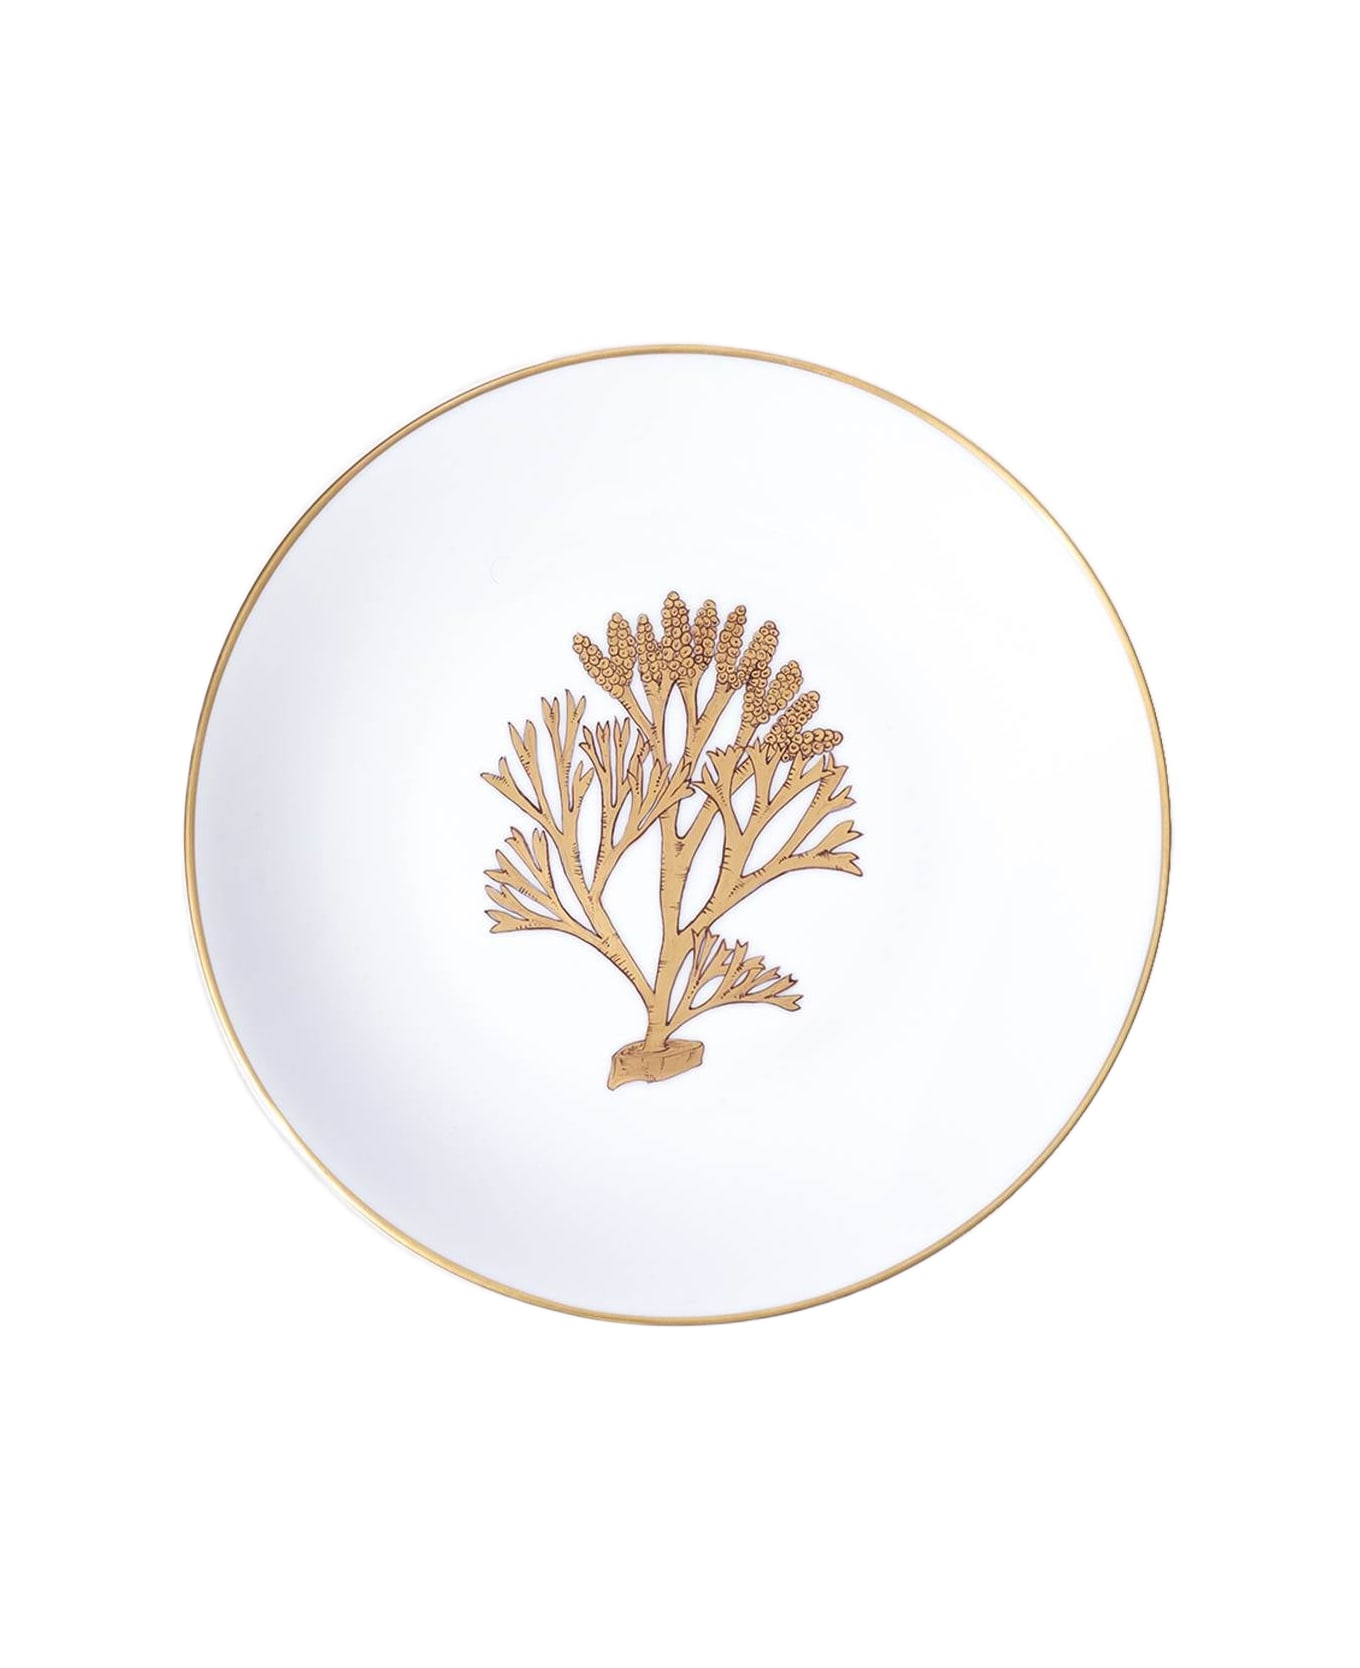 Larusmiani Golden Tree Dish  - Neutral